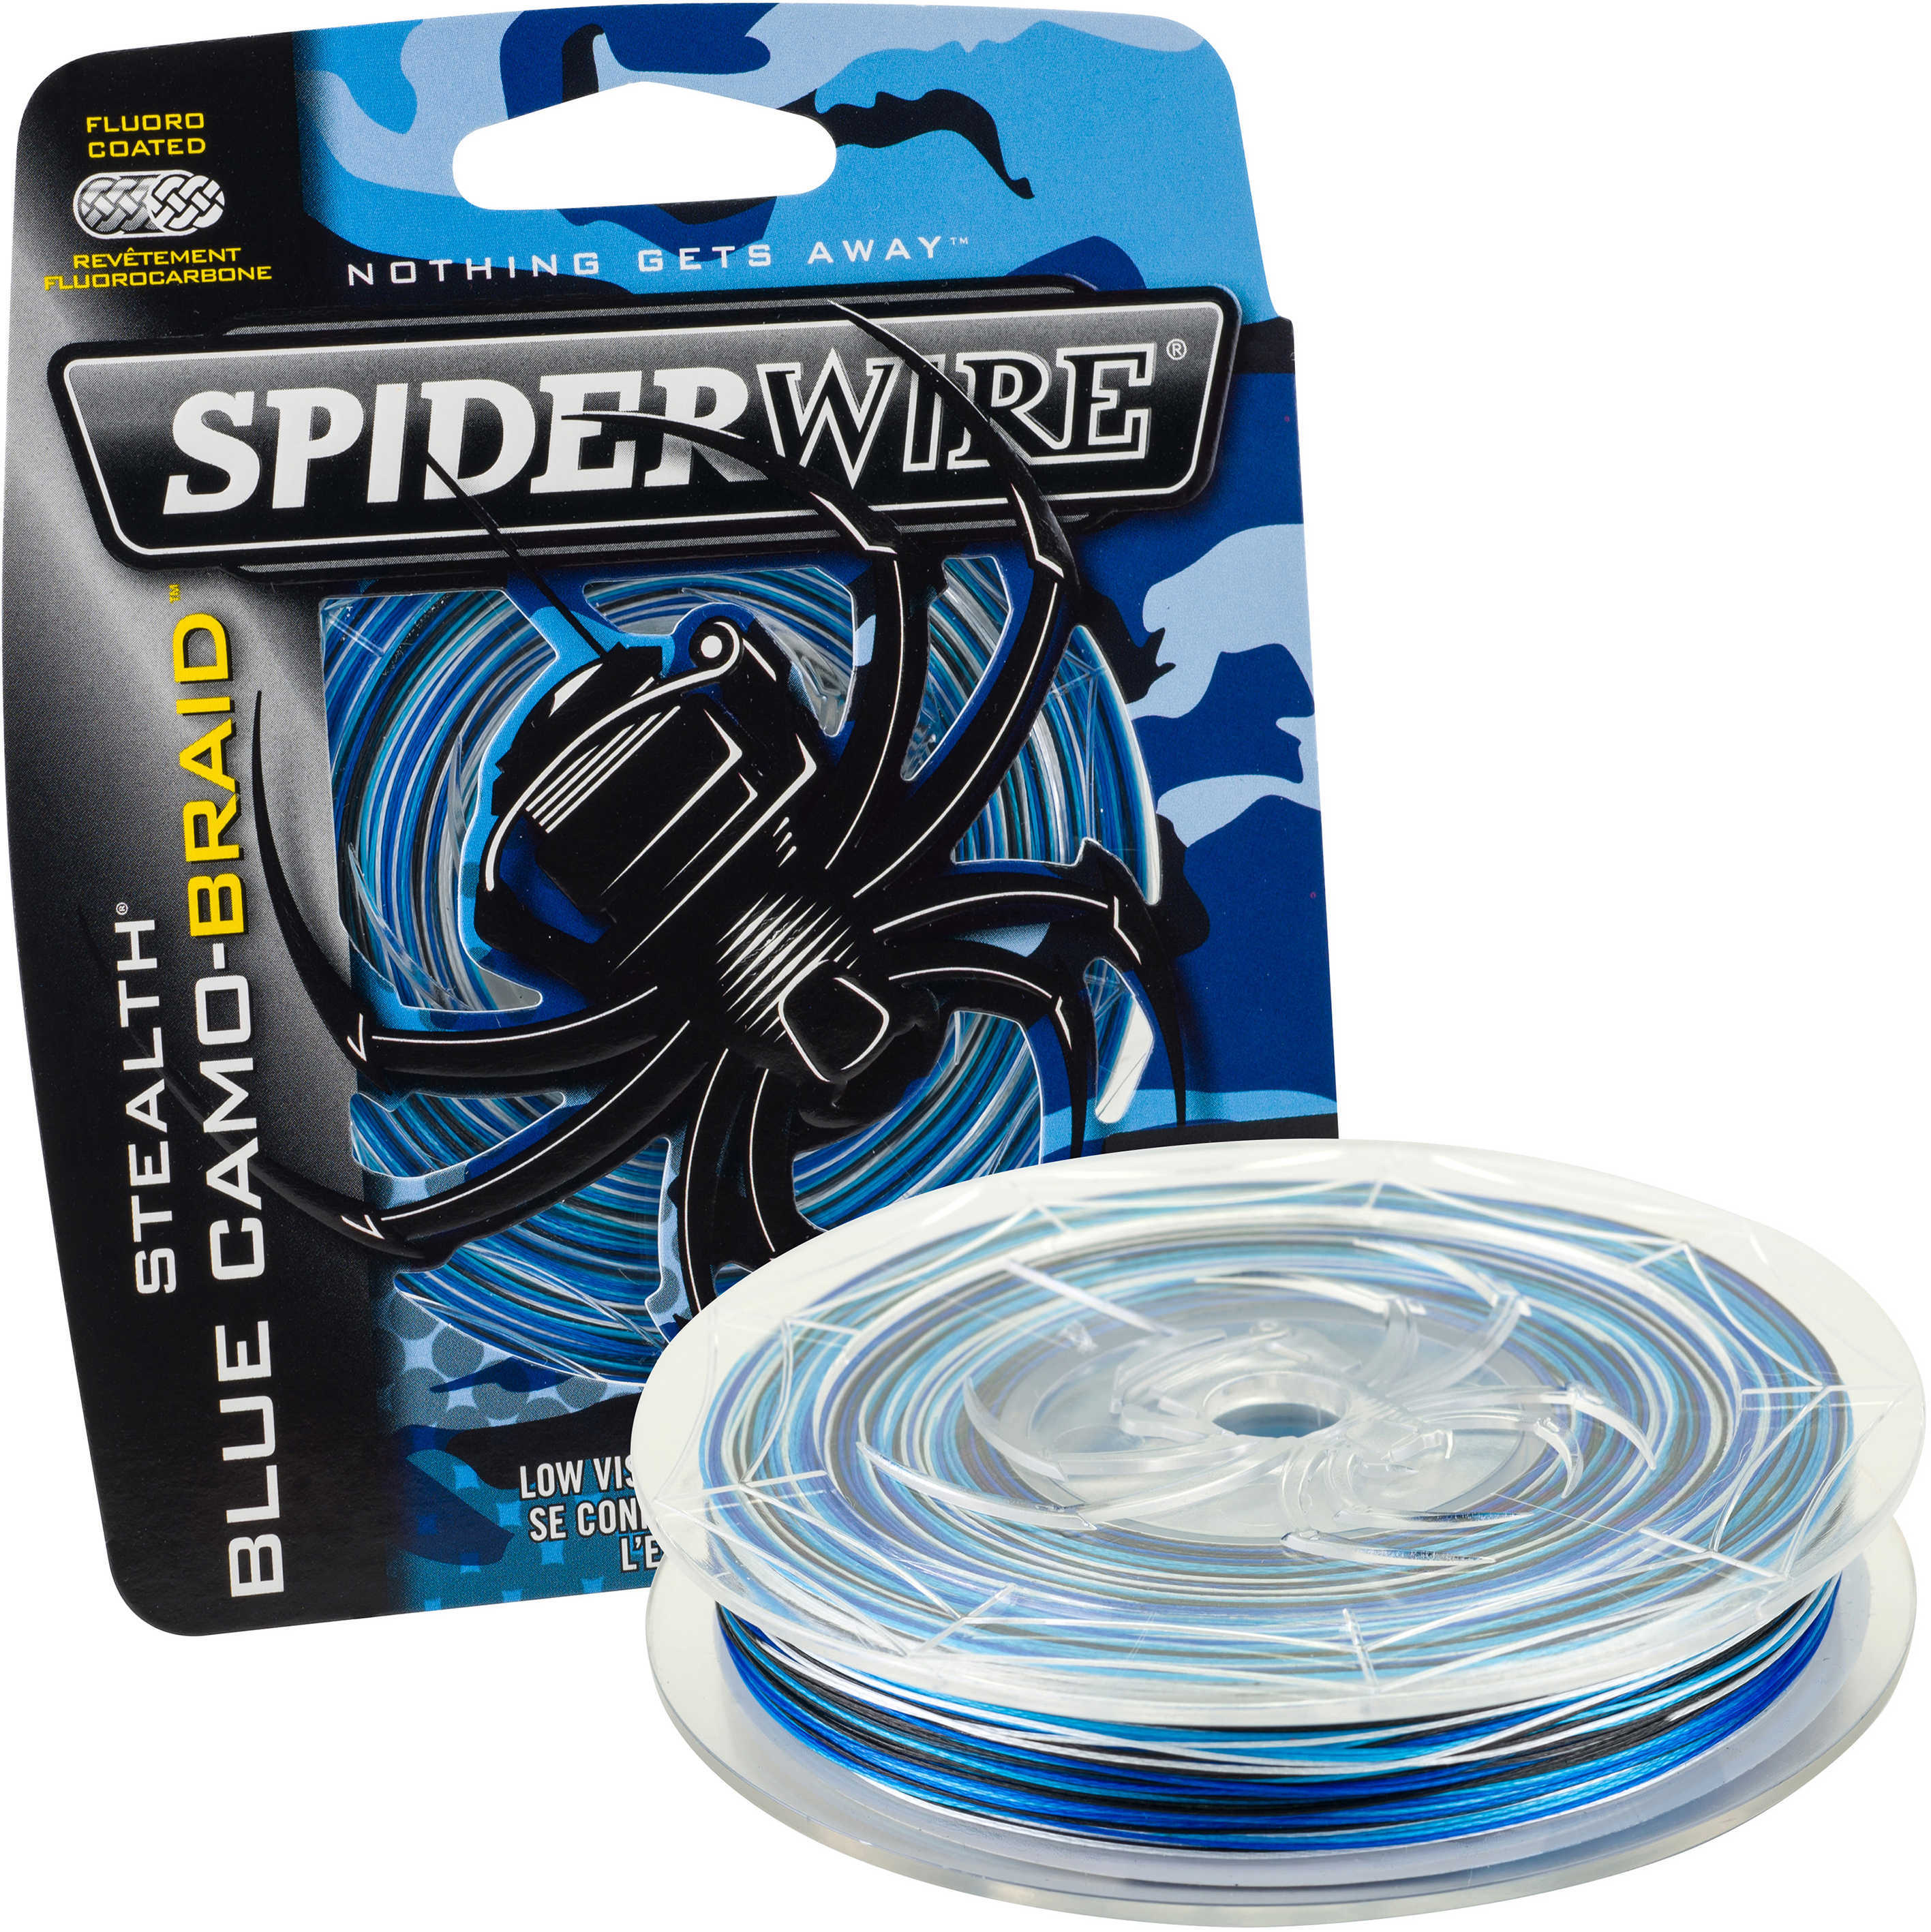 Spiderwire Stealth Braid 200 Yards , 10 lbs Strength, 0.008" Diameter, Blue Camo Md: 1374131